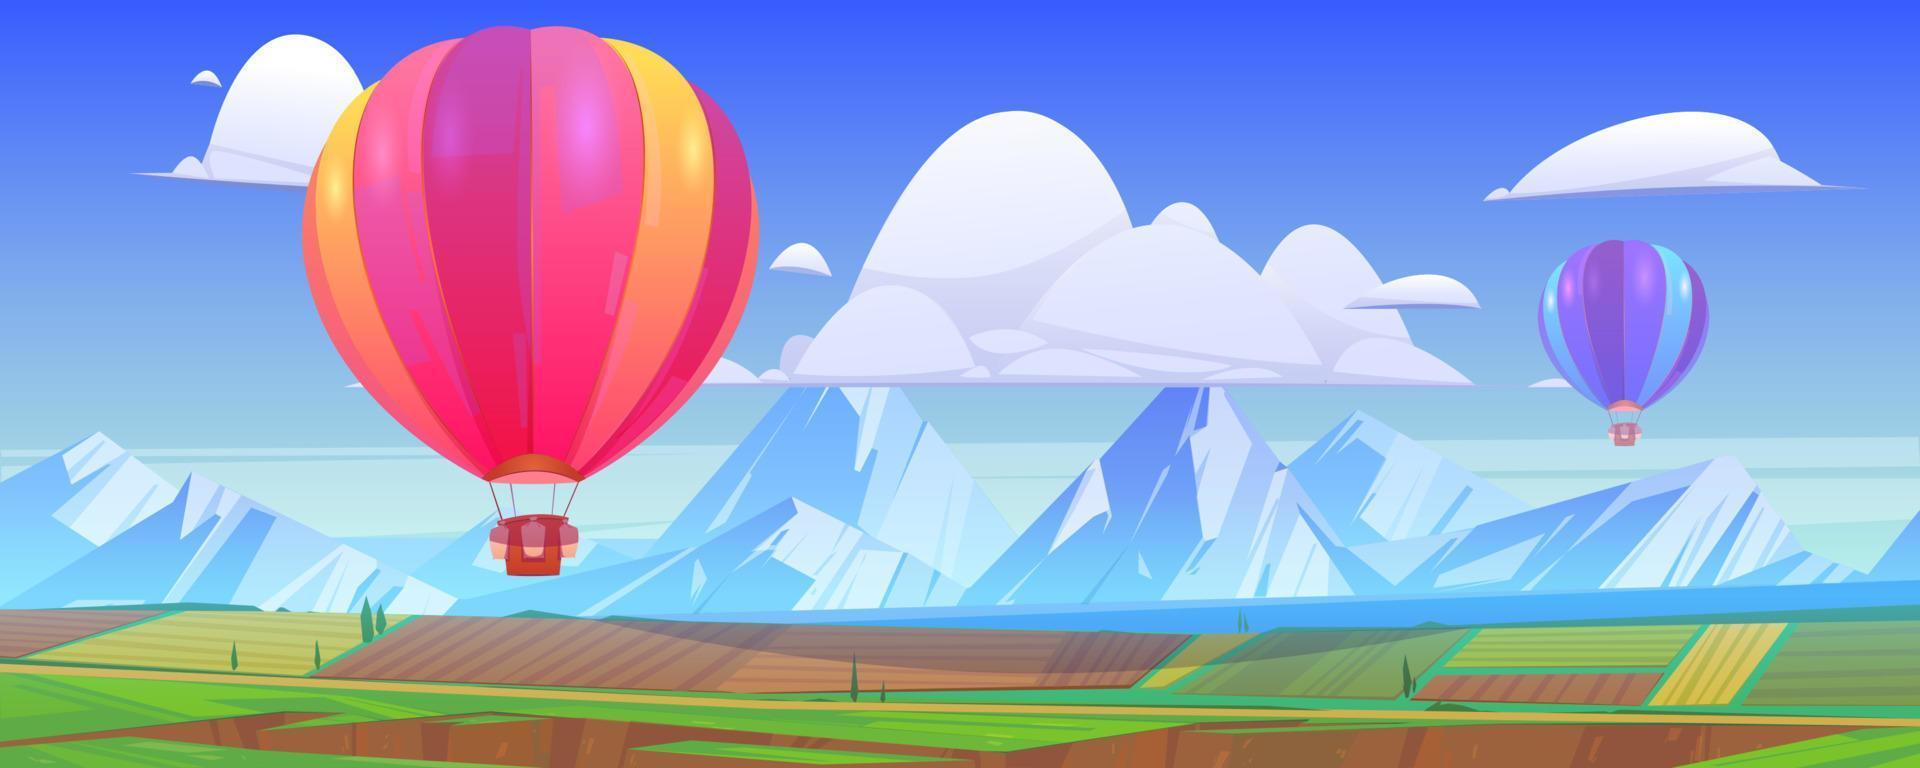 Hot air balloons fly above mountain landscape vector